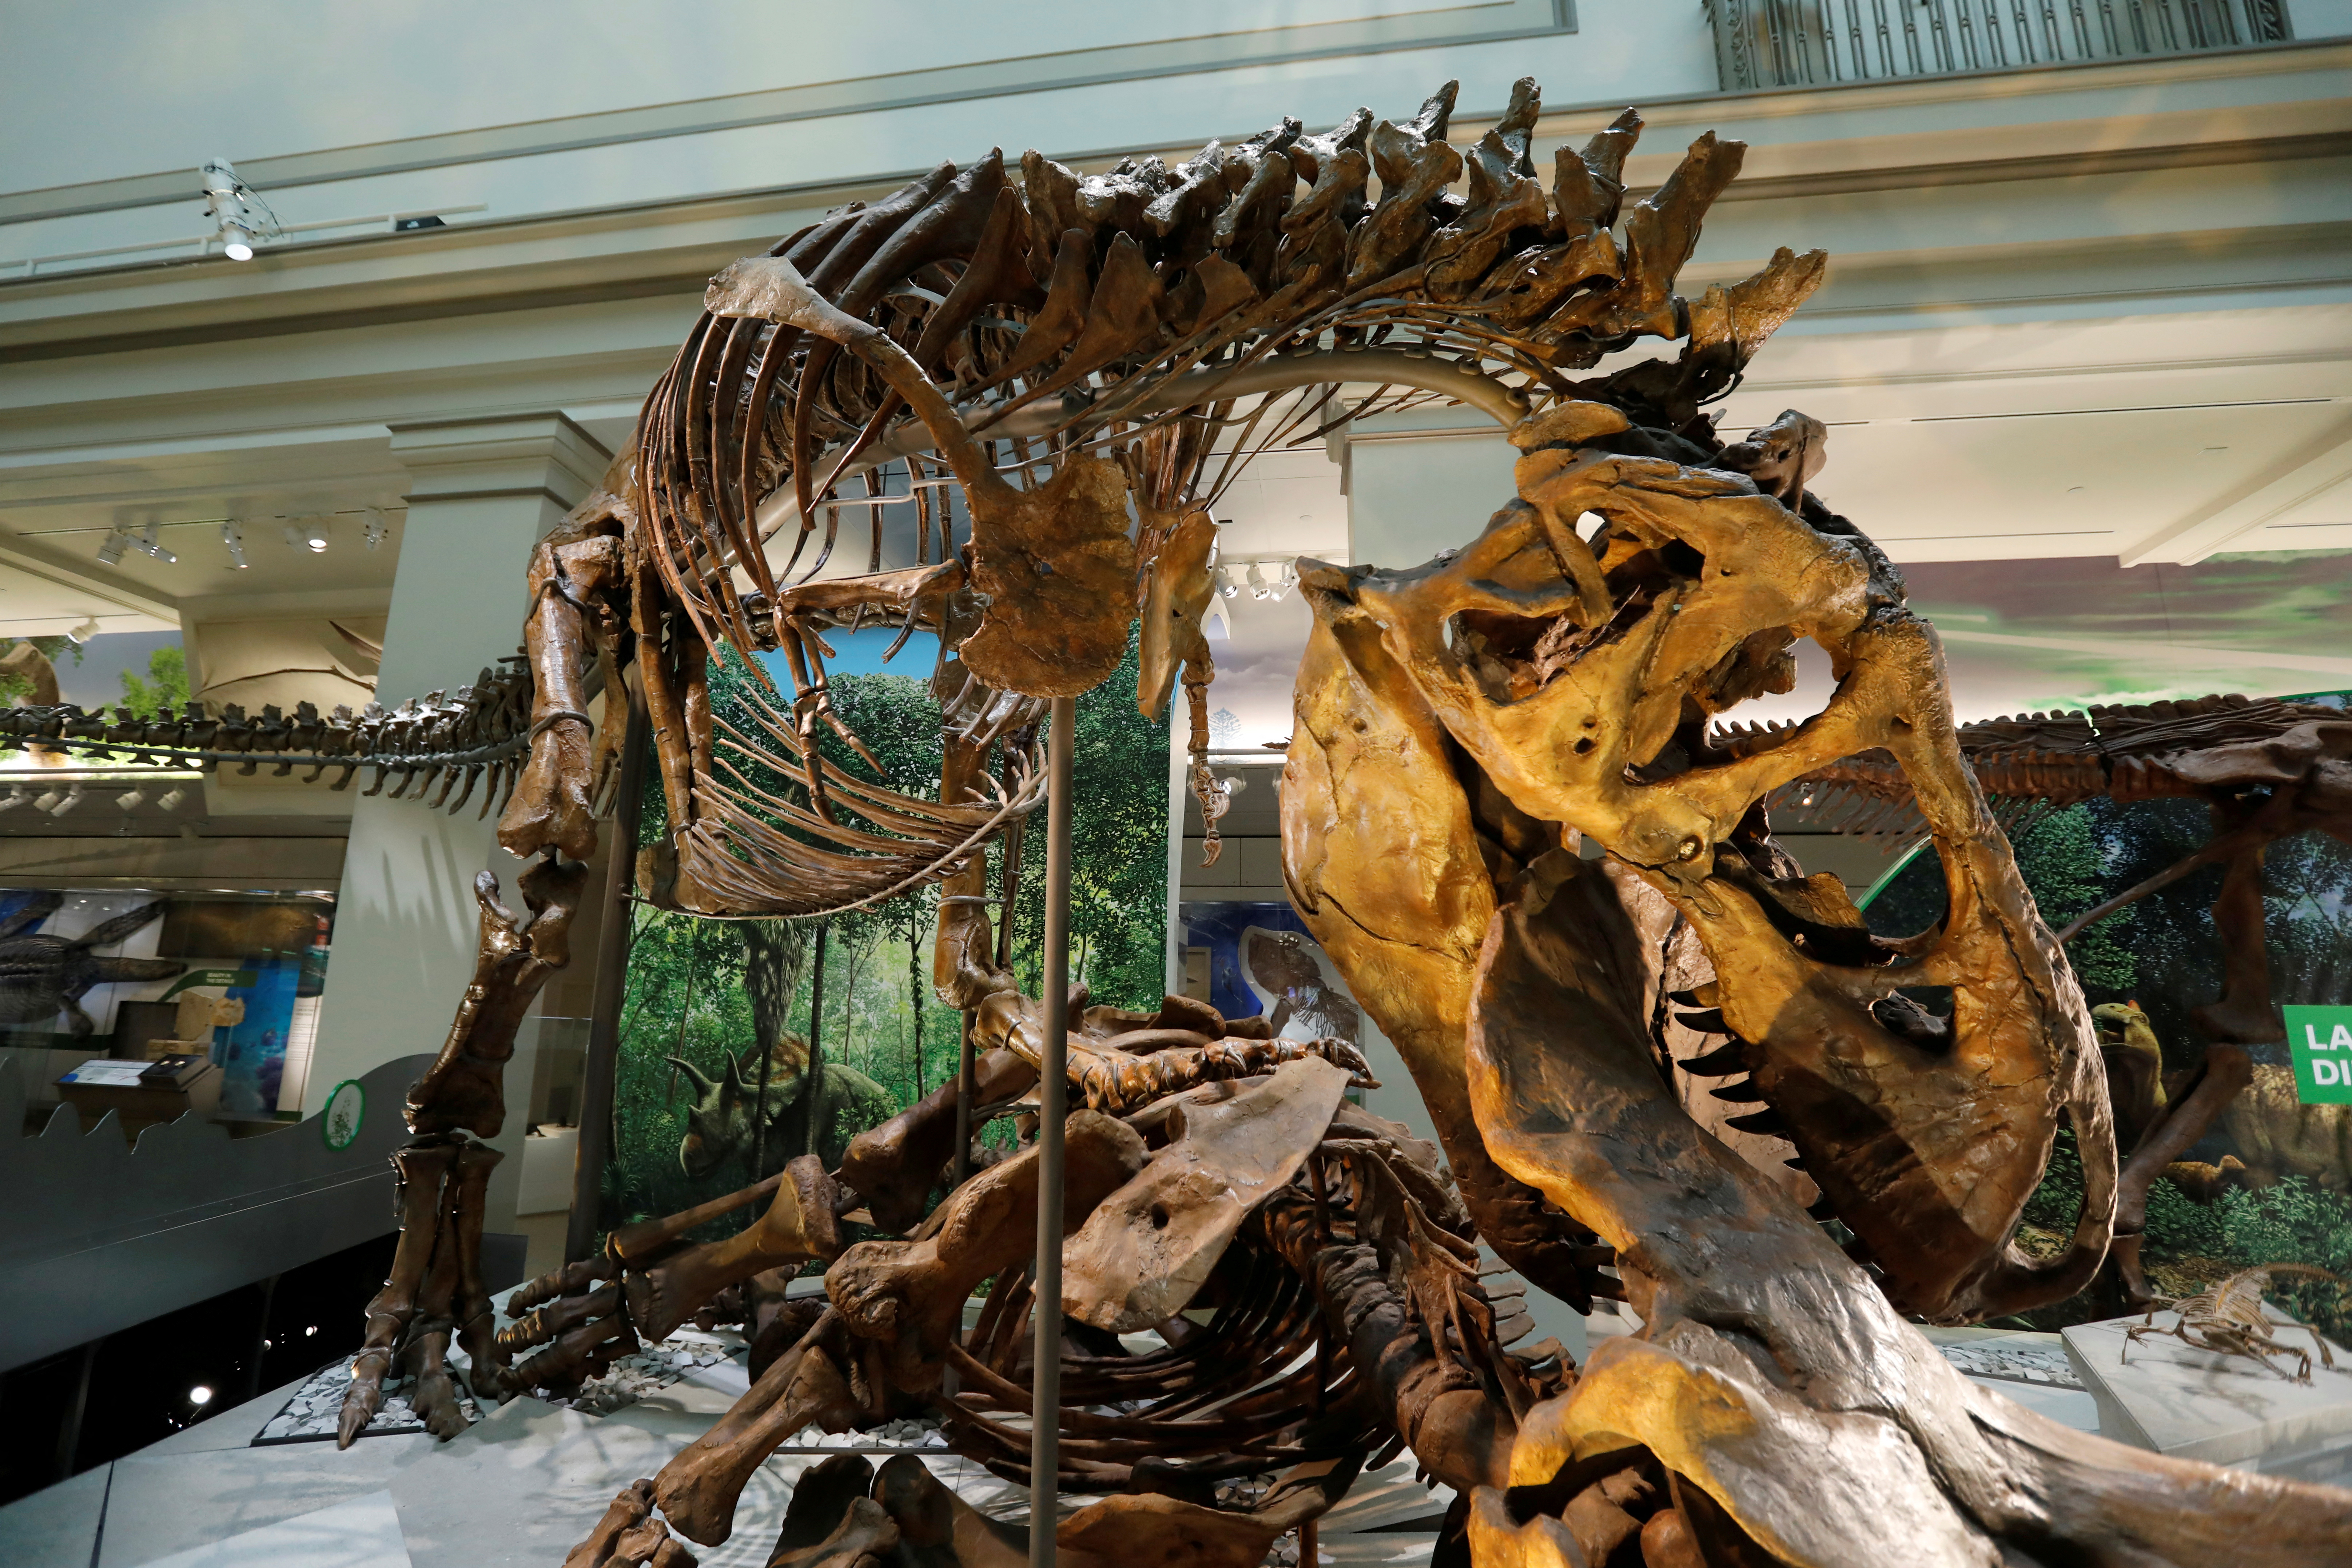 New Dinosaur Species Could Explain Tyrannosaurus Rex Evolution